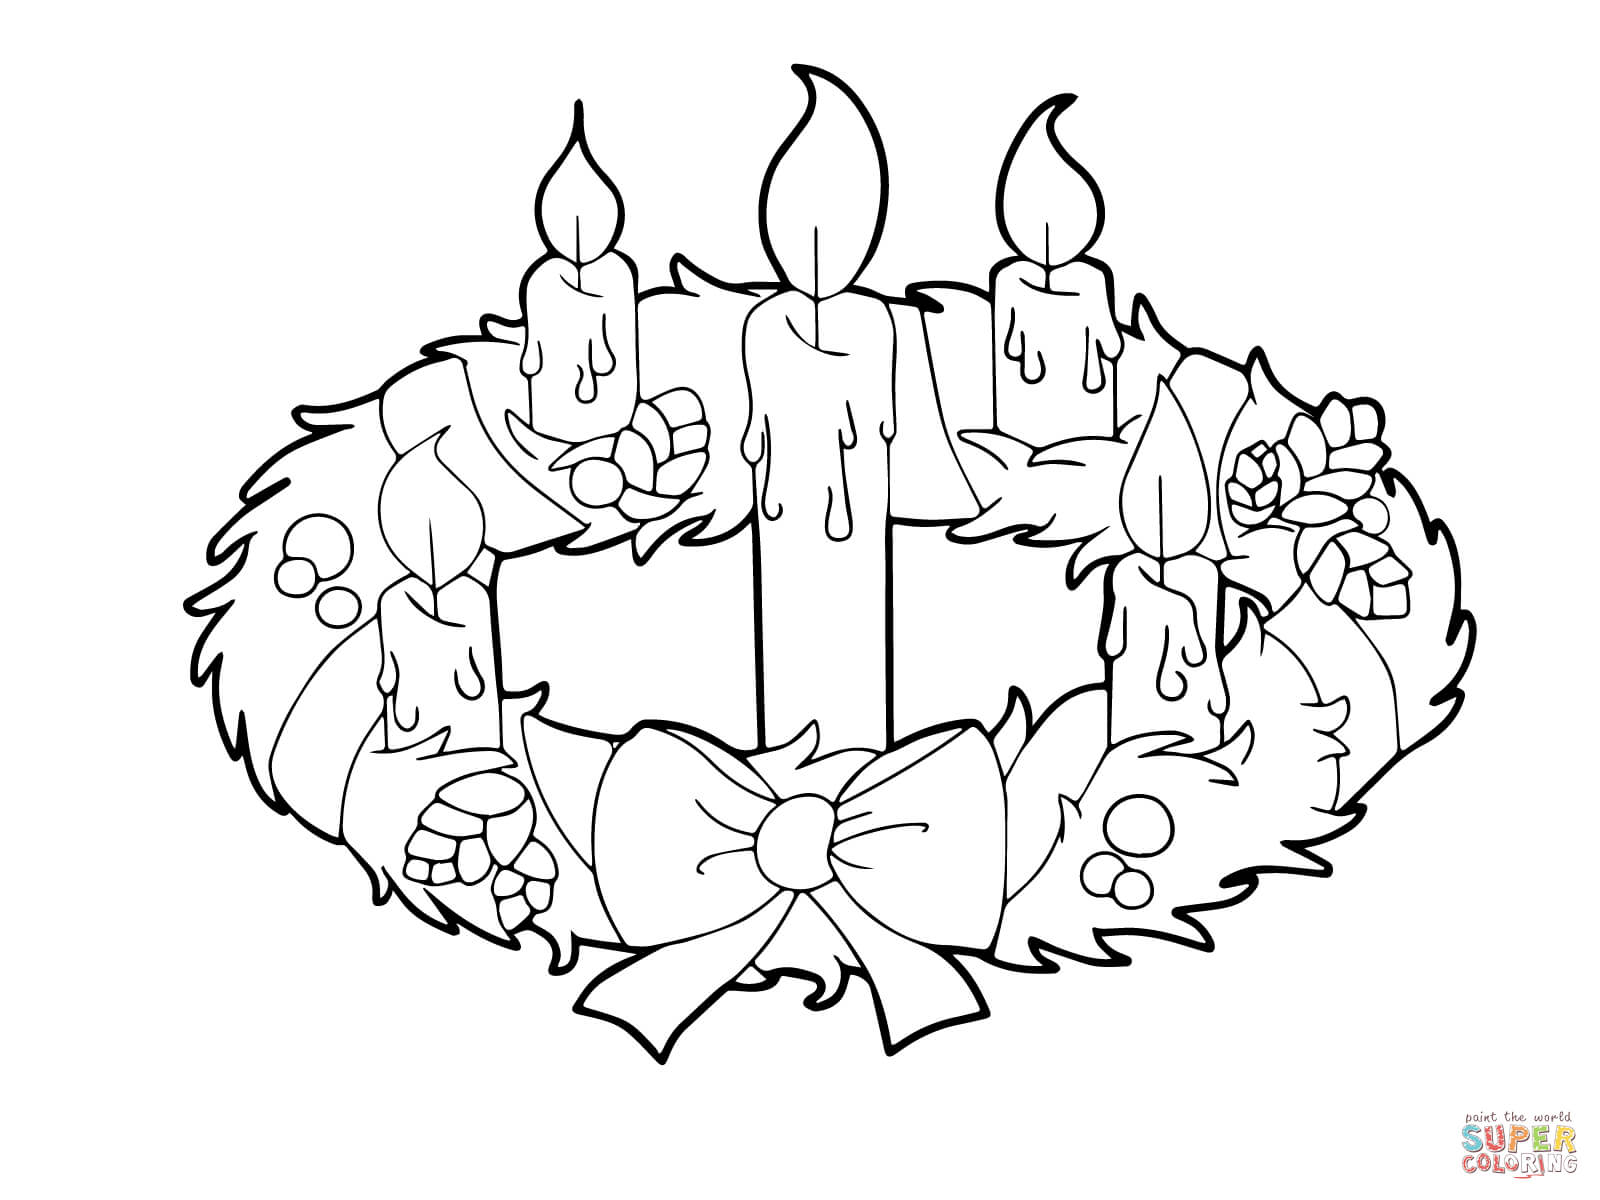 Free Advent Wreath Cliparts, Download Free Clip Art, Free Clip Art.